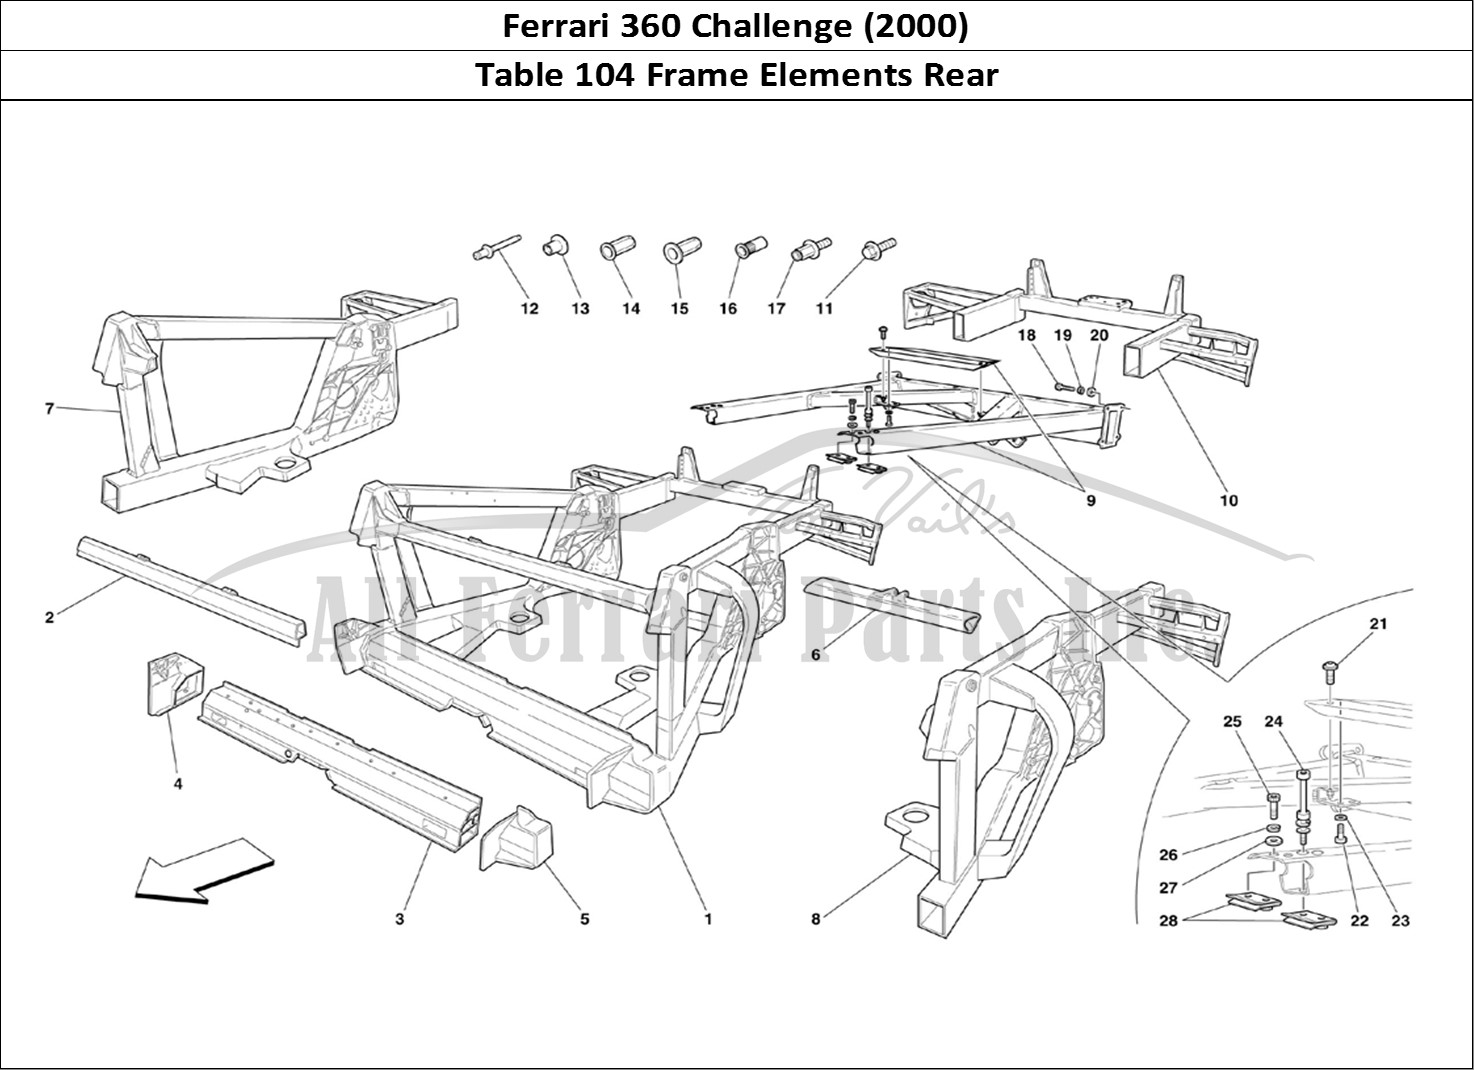 Ferrari Parts Ferrari 360 Challenge (2000) Page 104 Frame - Rear Elements Str